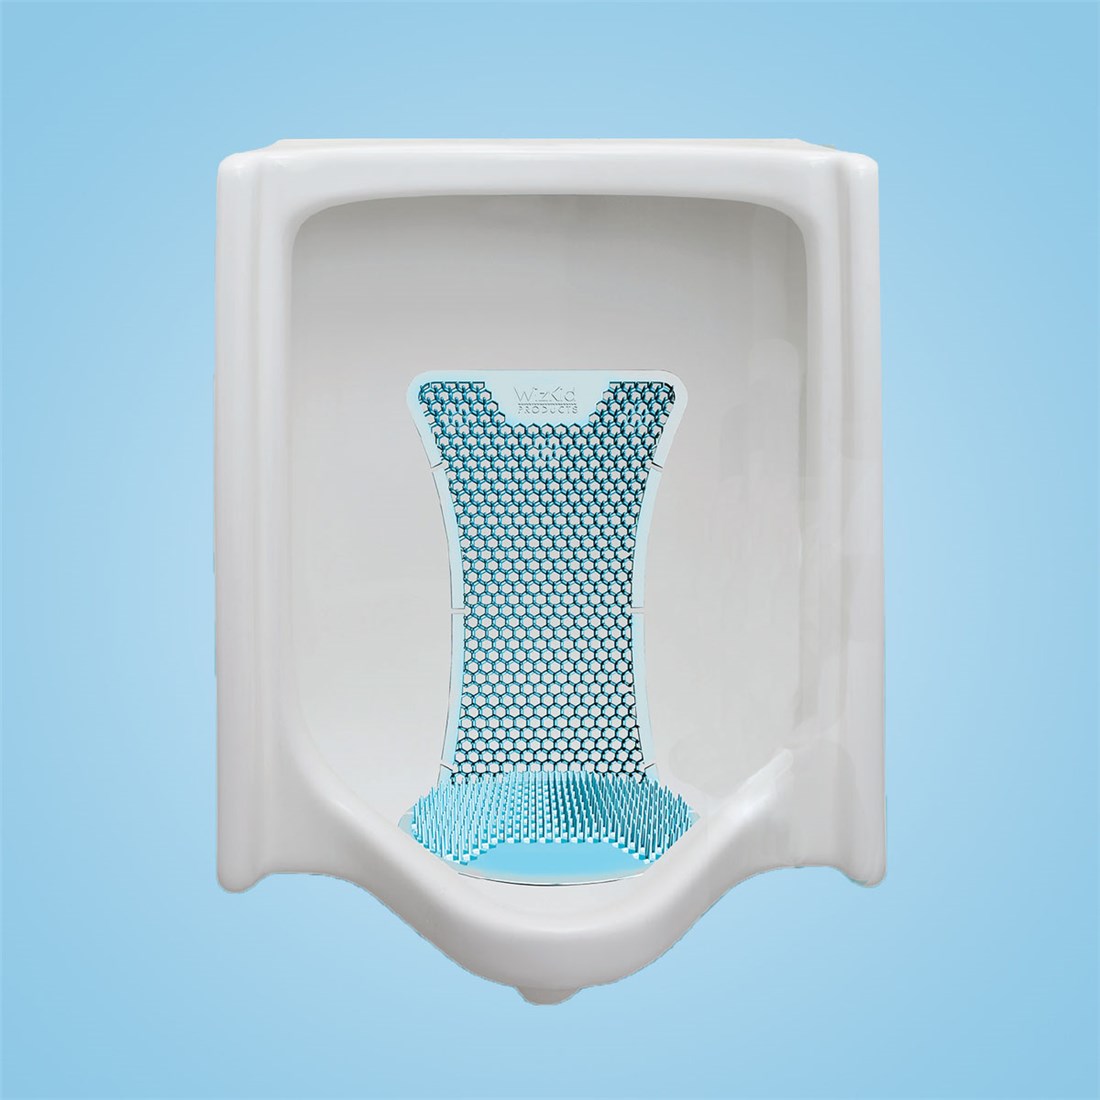 Anti-Splash Urinal Screens